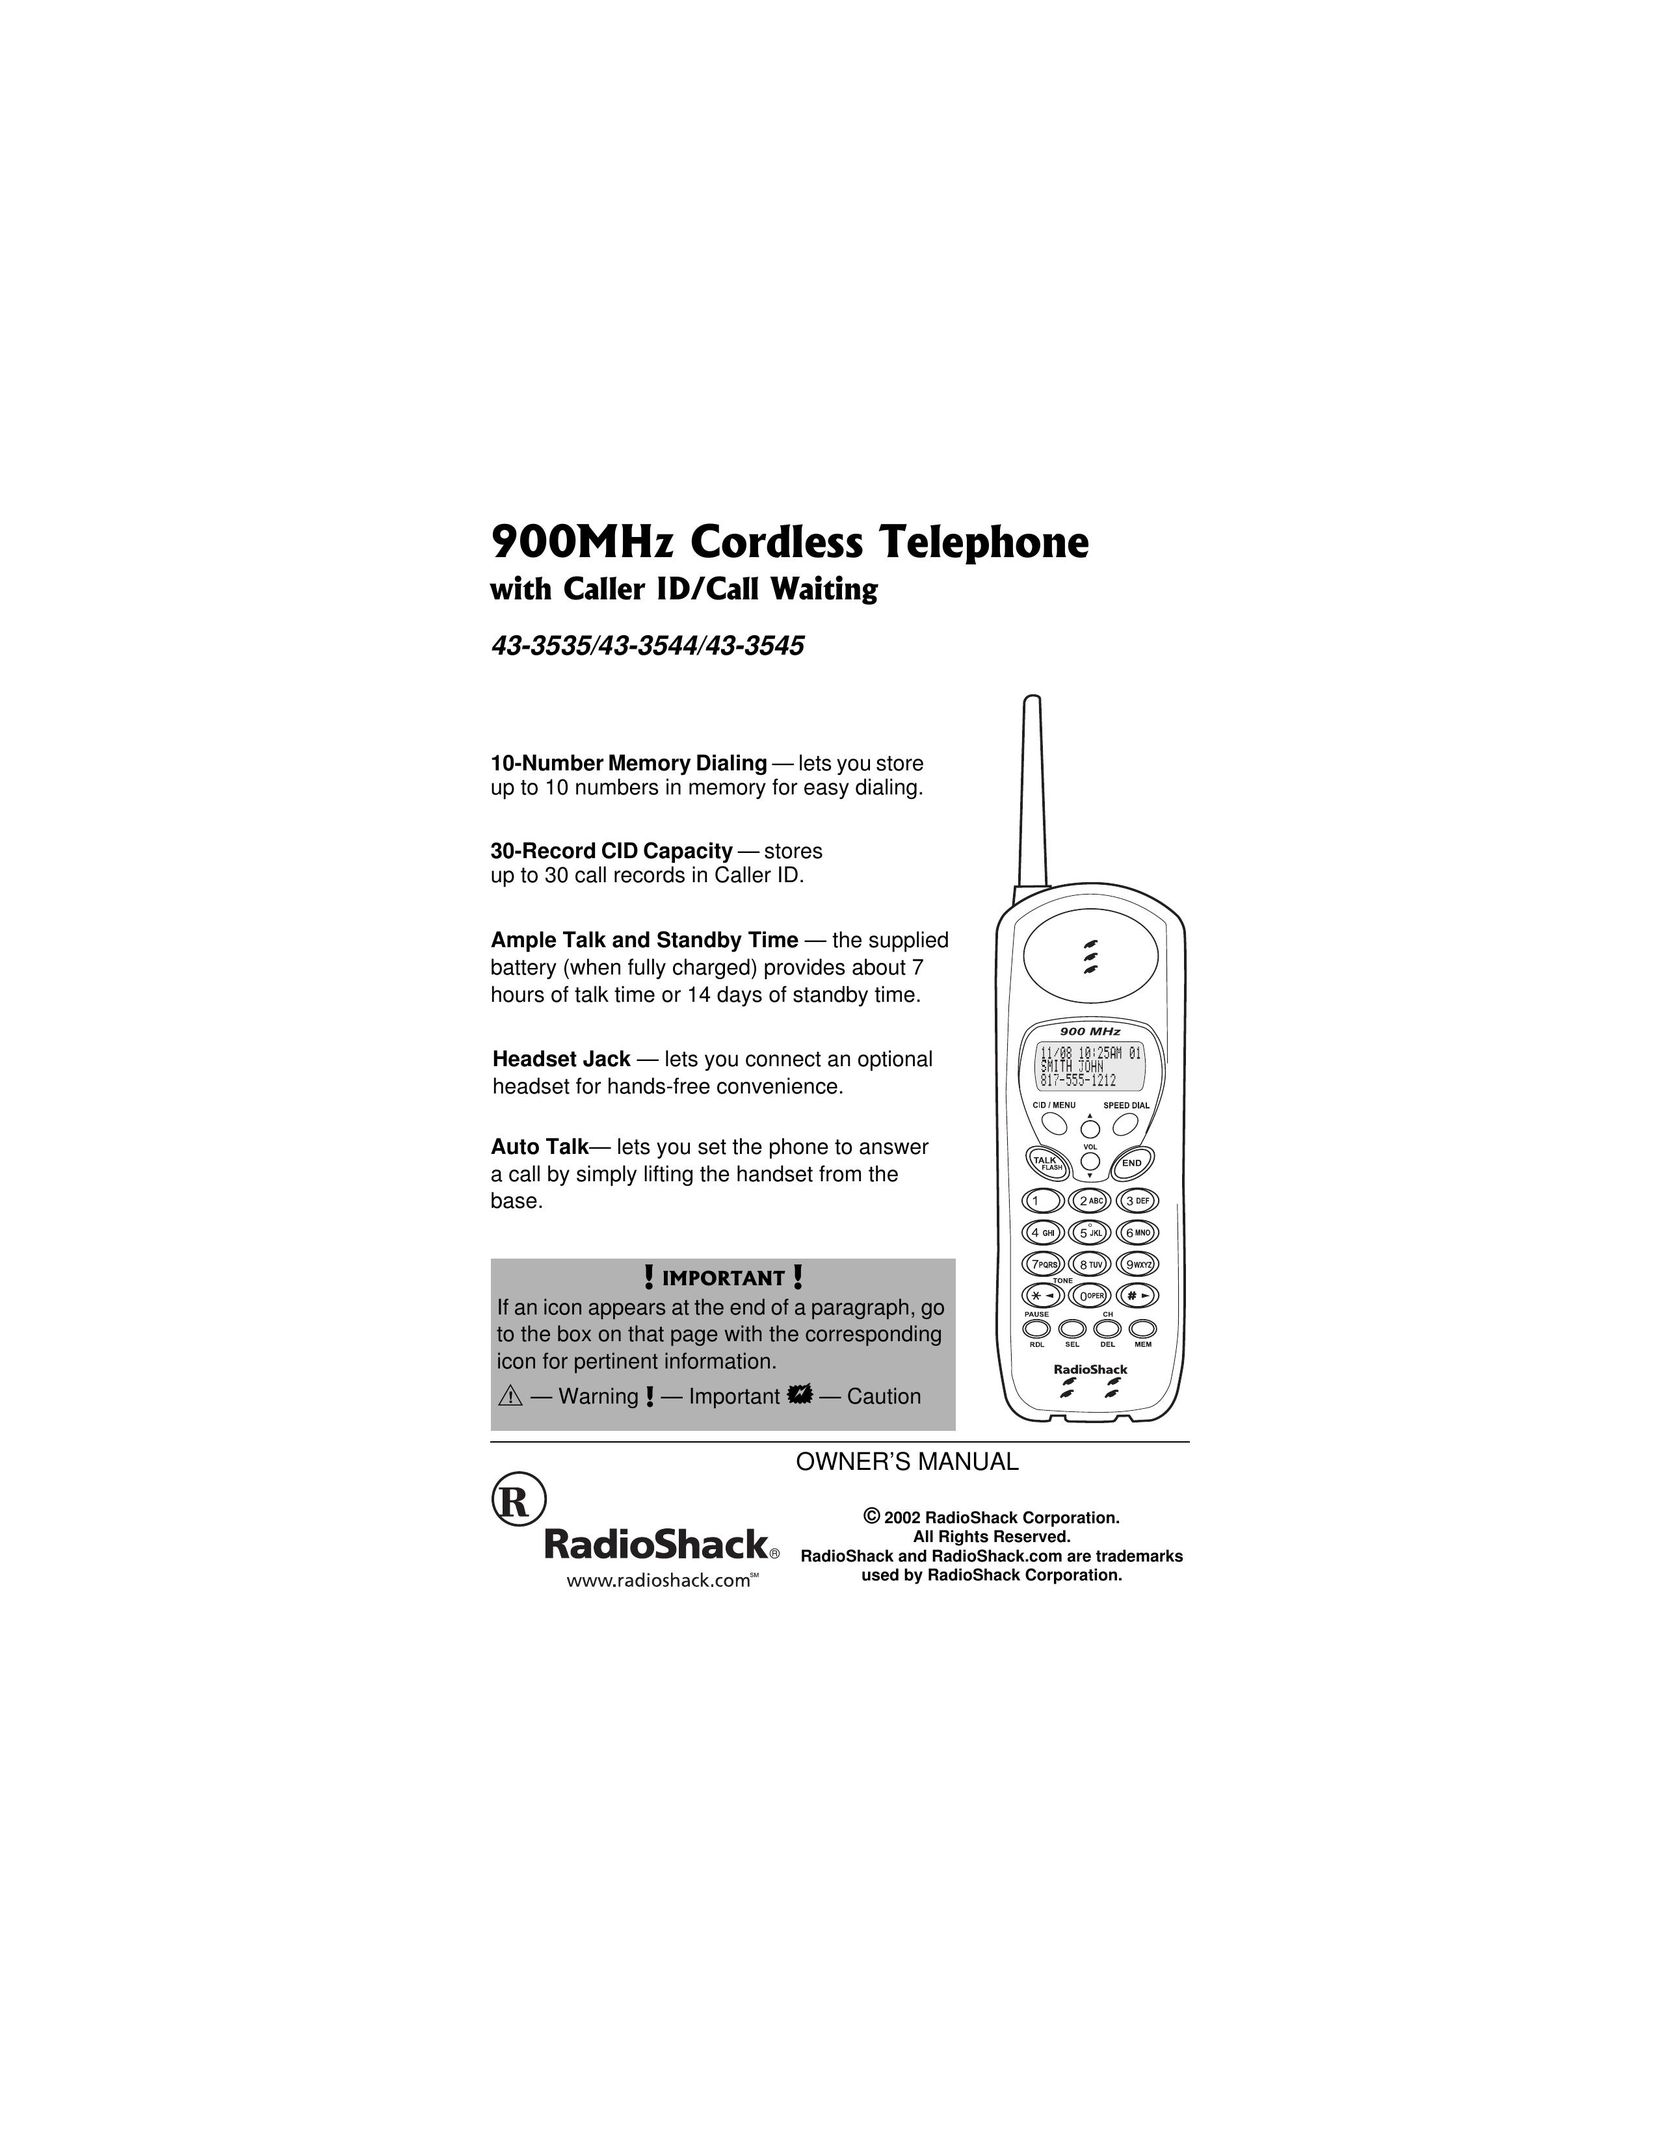 Radio Shack 43-3545 Cordless Telephone User Manual